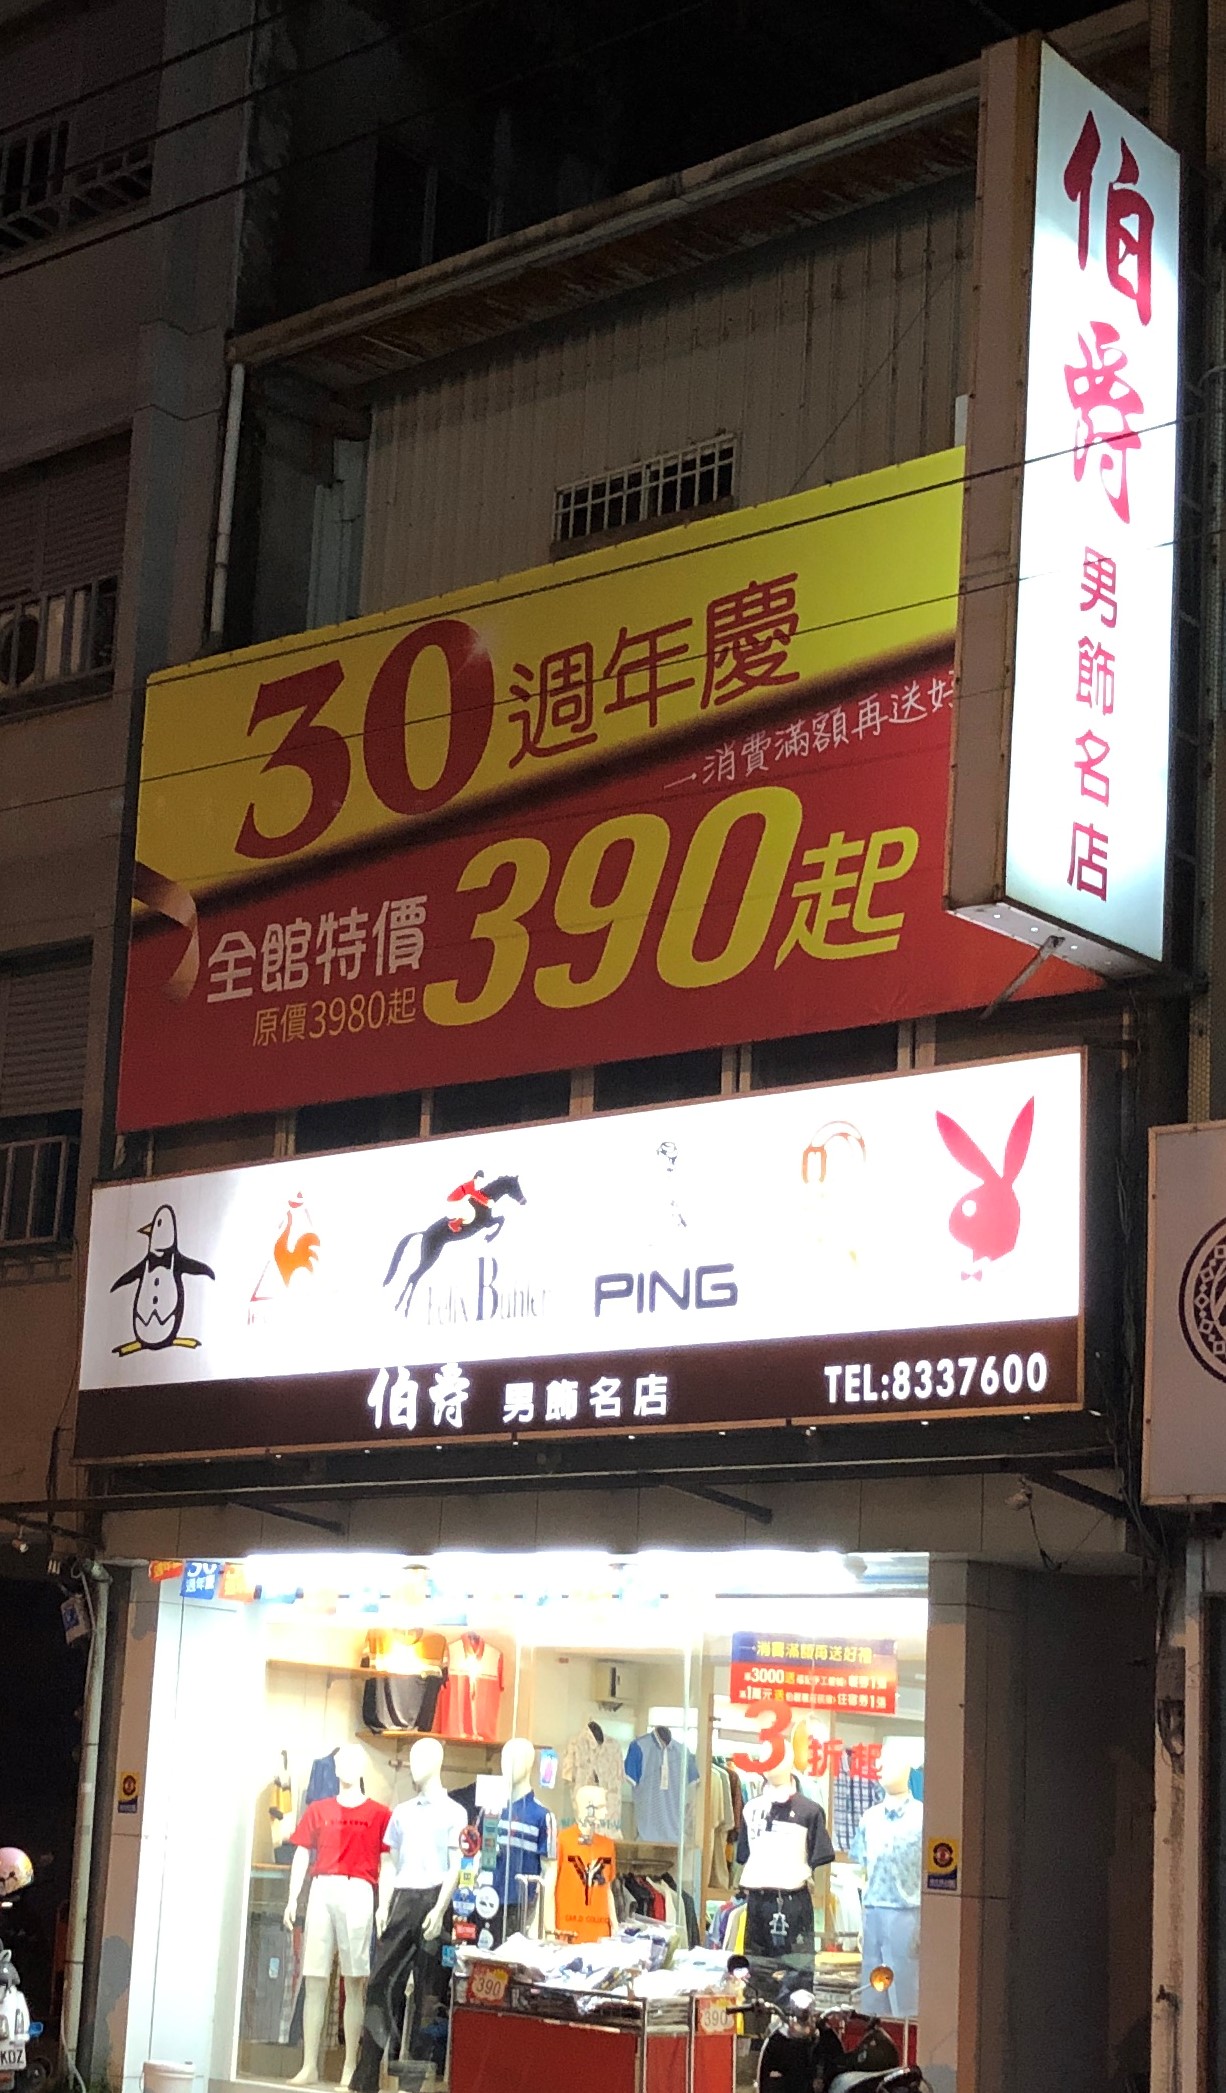 Bo Jue Men’s Clothing Store